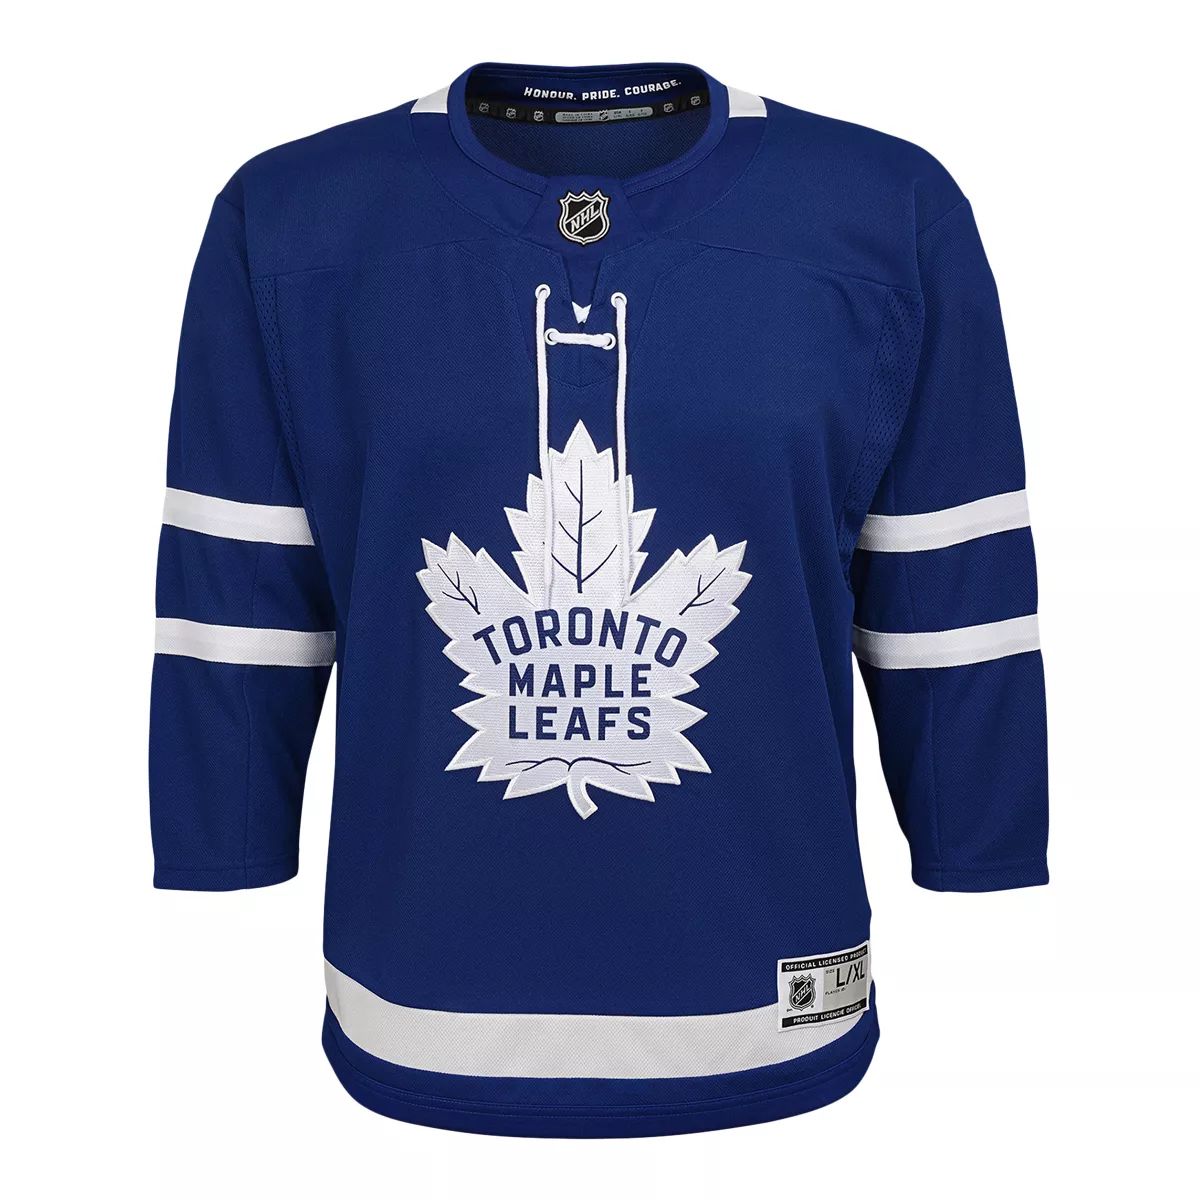 OUTERSTUFF Toronto Maple Leafs John Tavares Replica Jersey Baby Hockey NHL